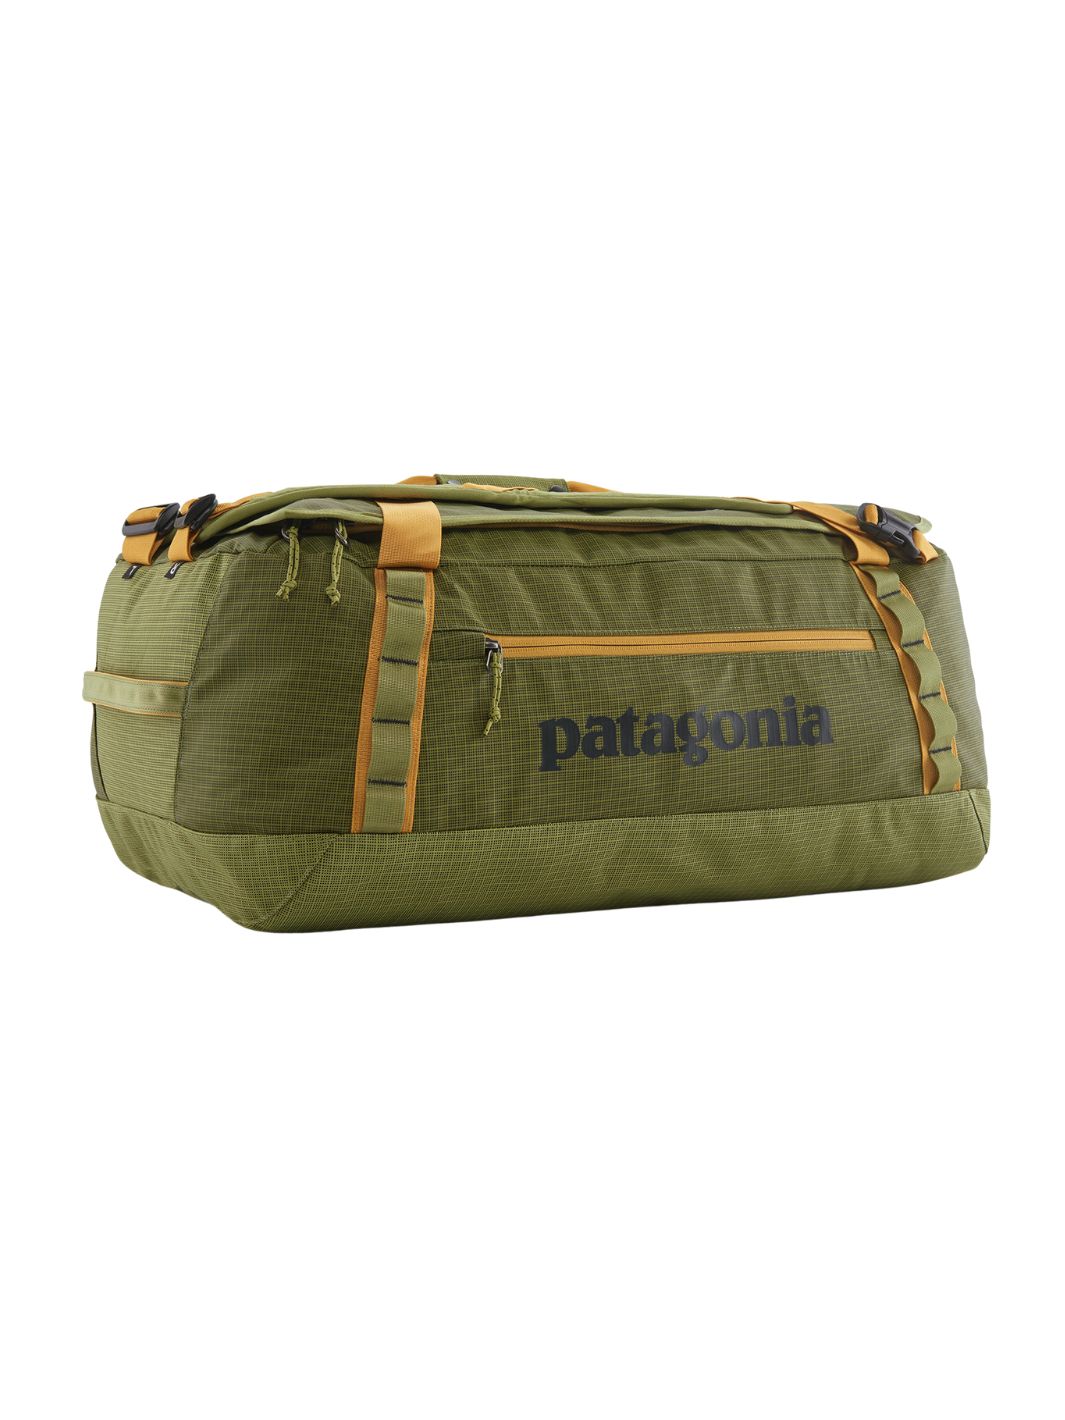 Patagonia Accessories Bag | Black Hole Duffel Buckhorn Green 55L